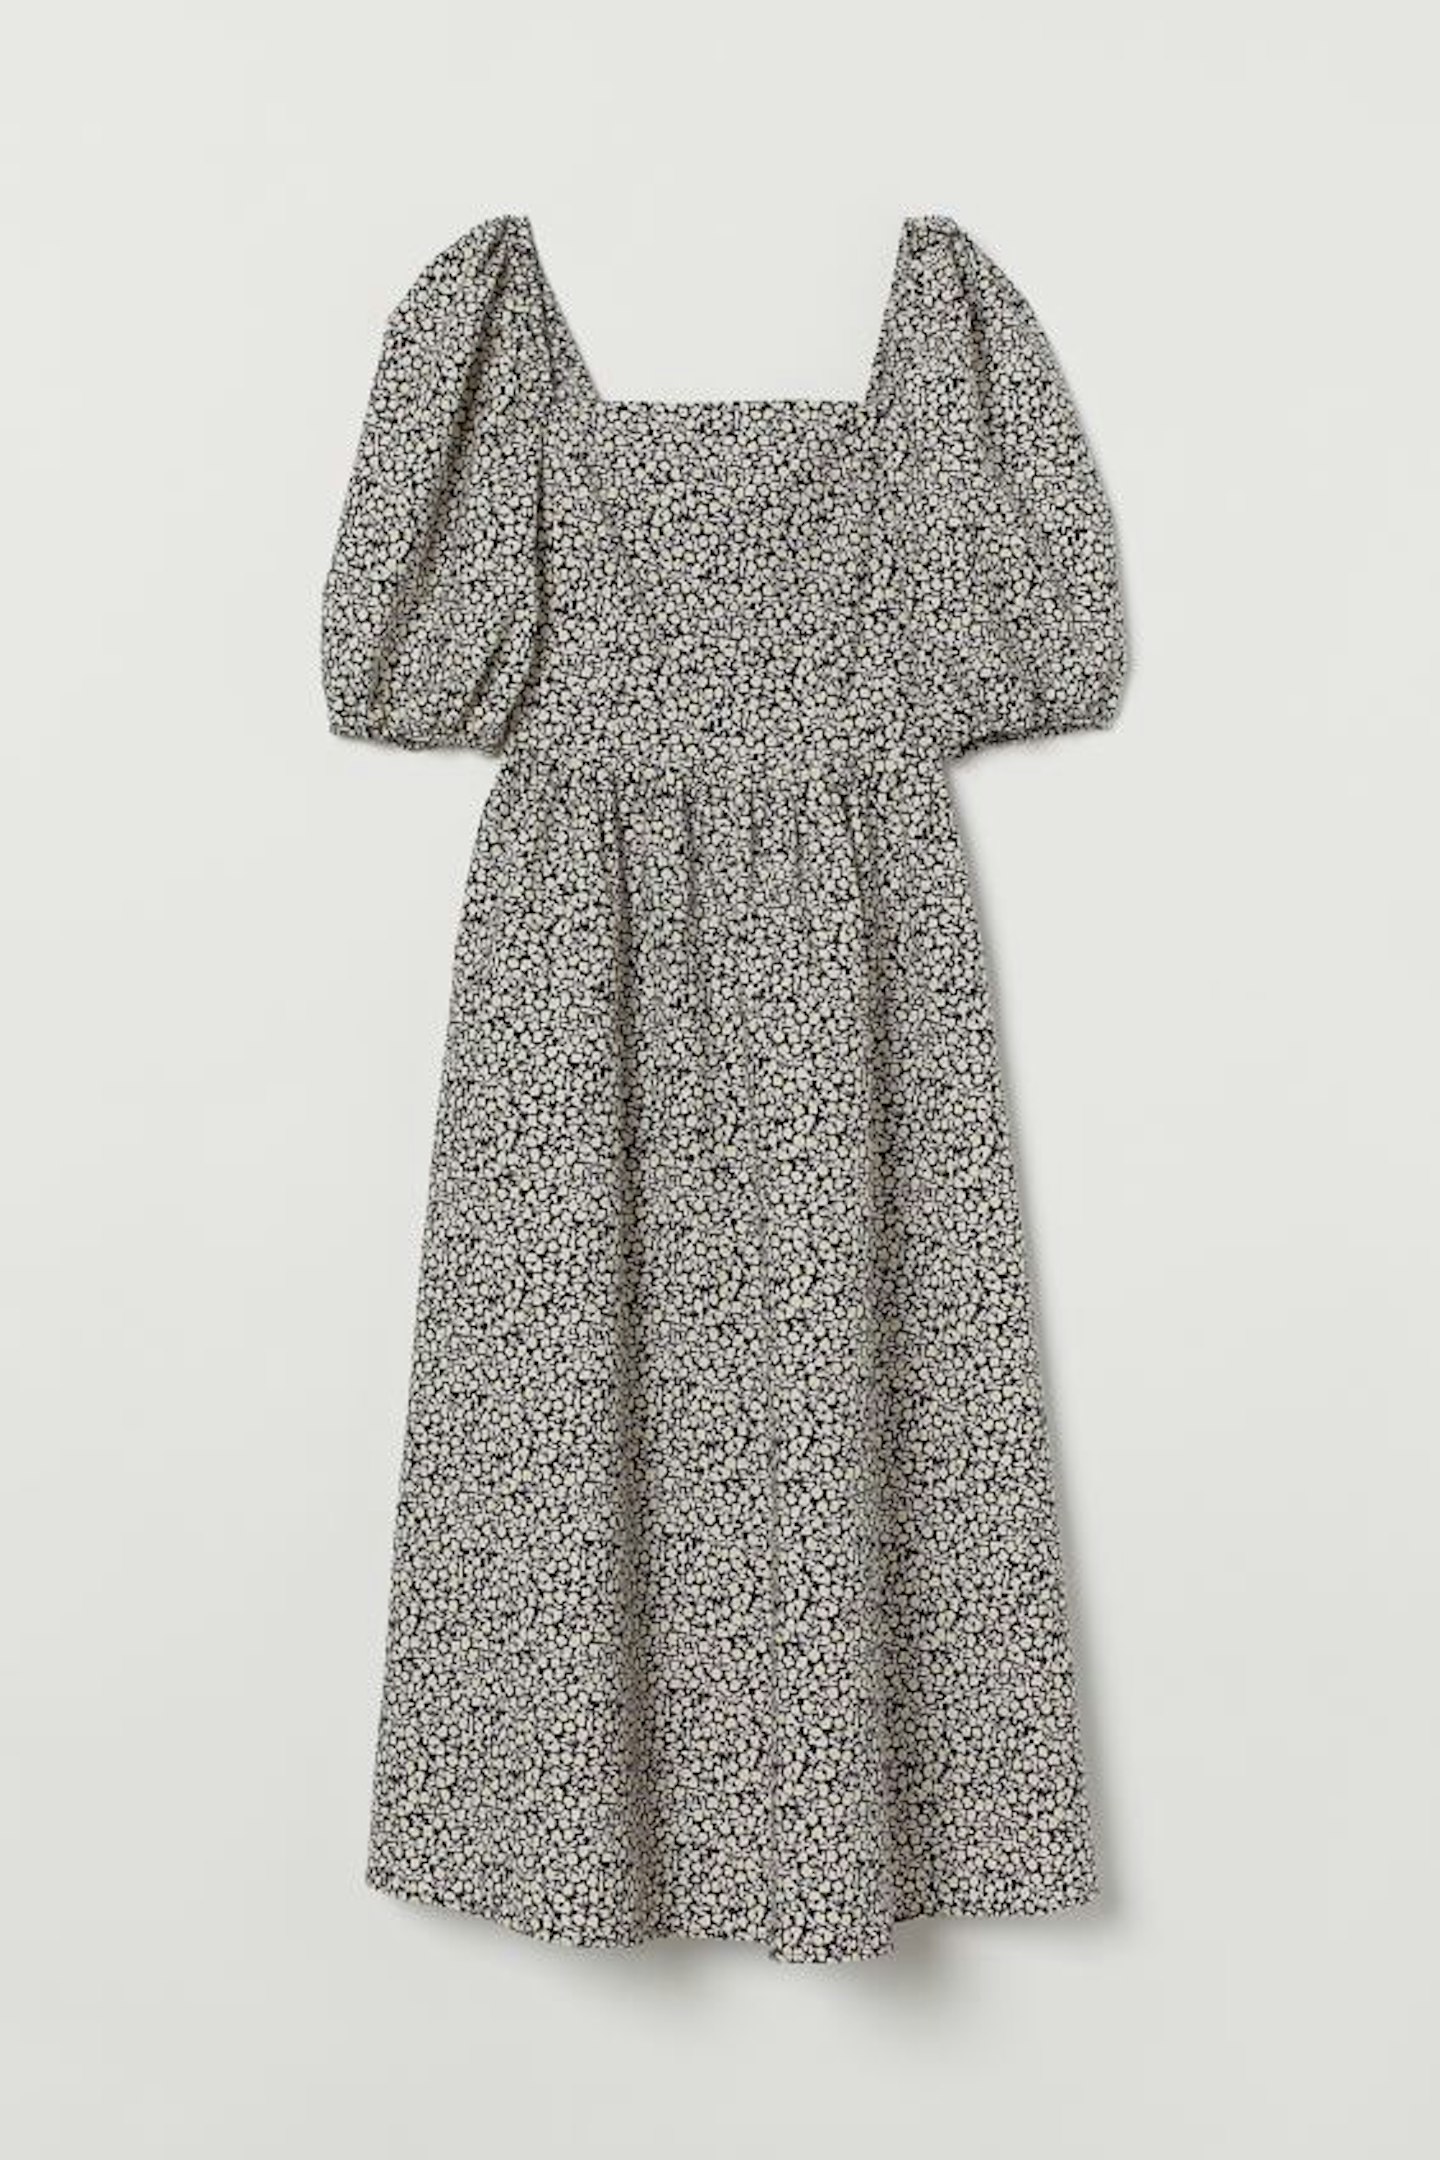 H&M, Puff-sleeved cotton dress, £24.99